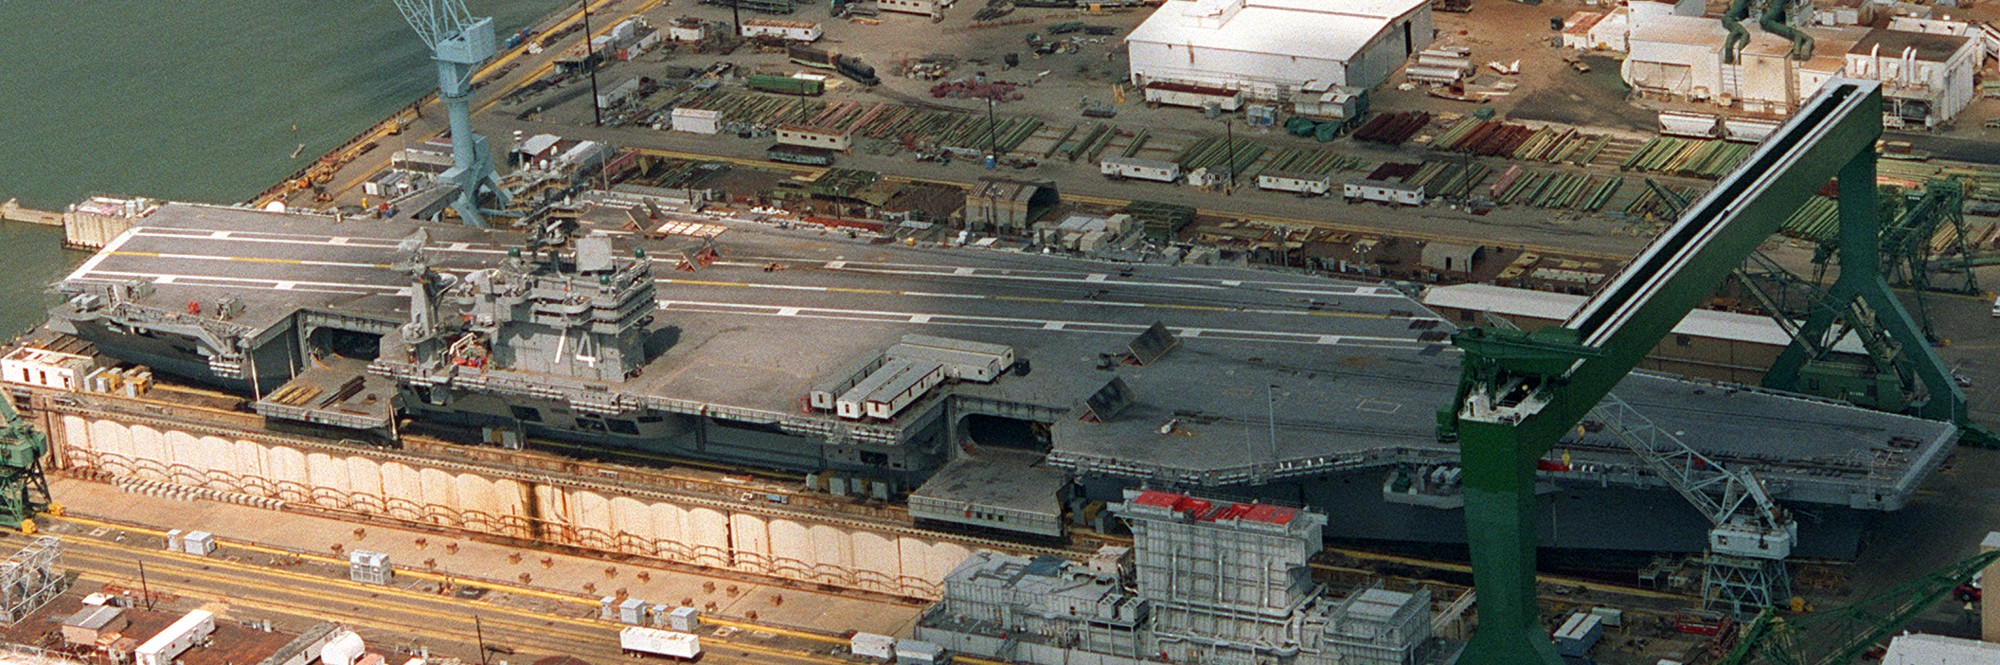 uss john c. stennis cvn-74 newport news shipbuilding drydock 1996 73